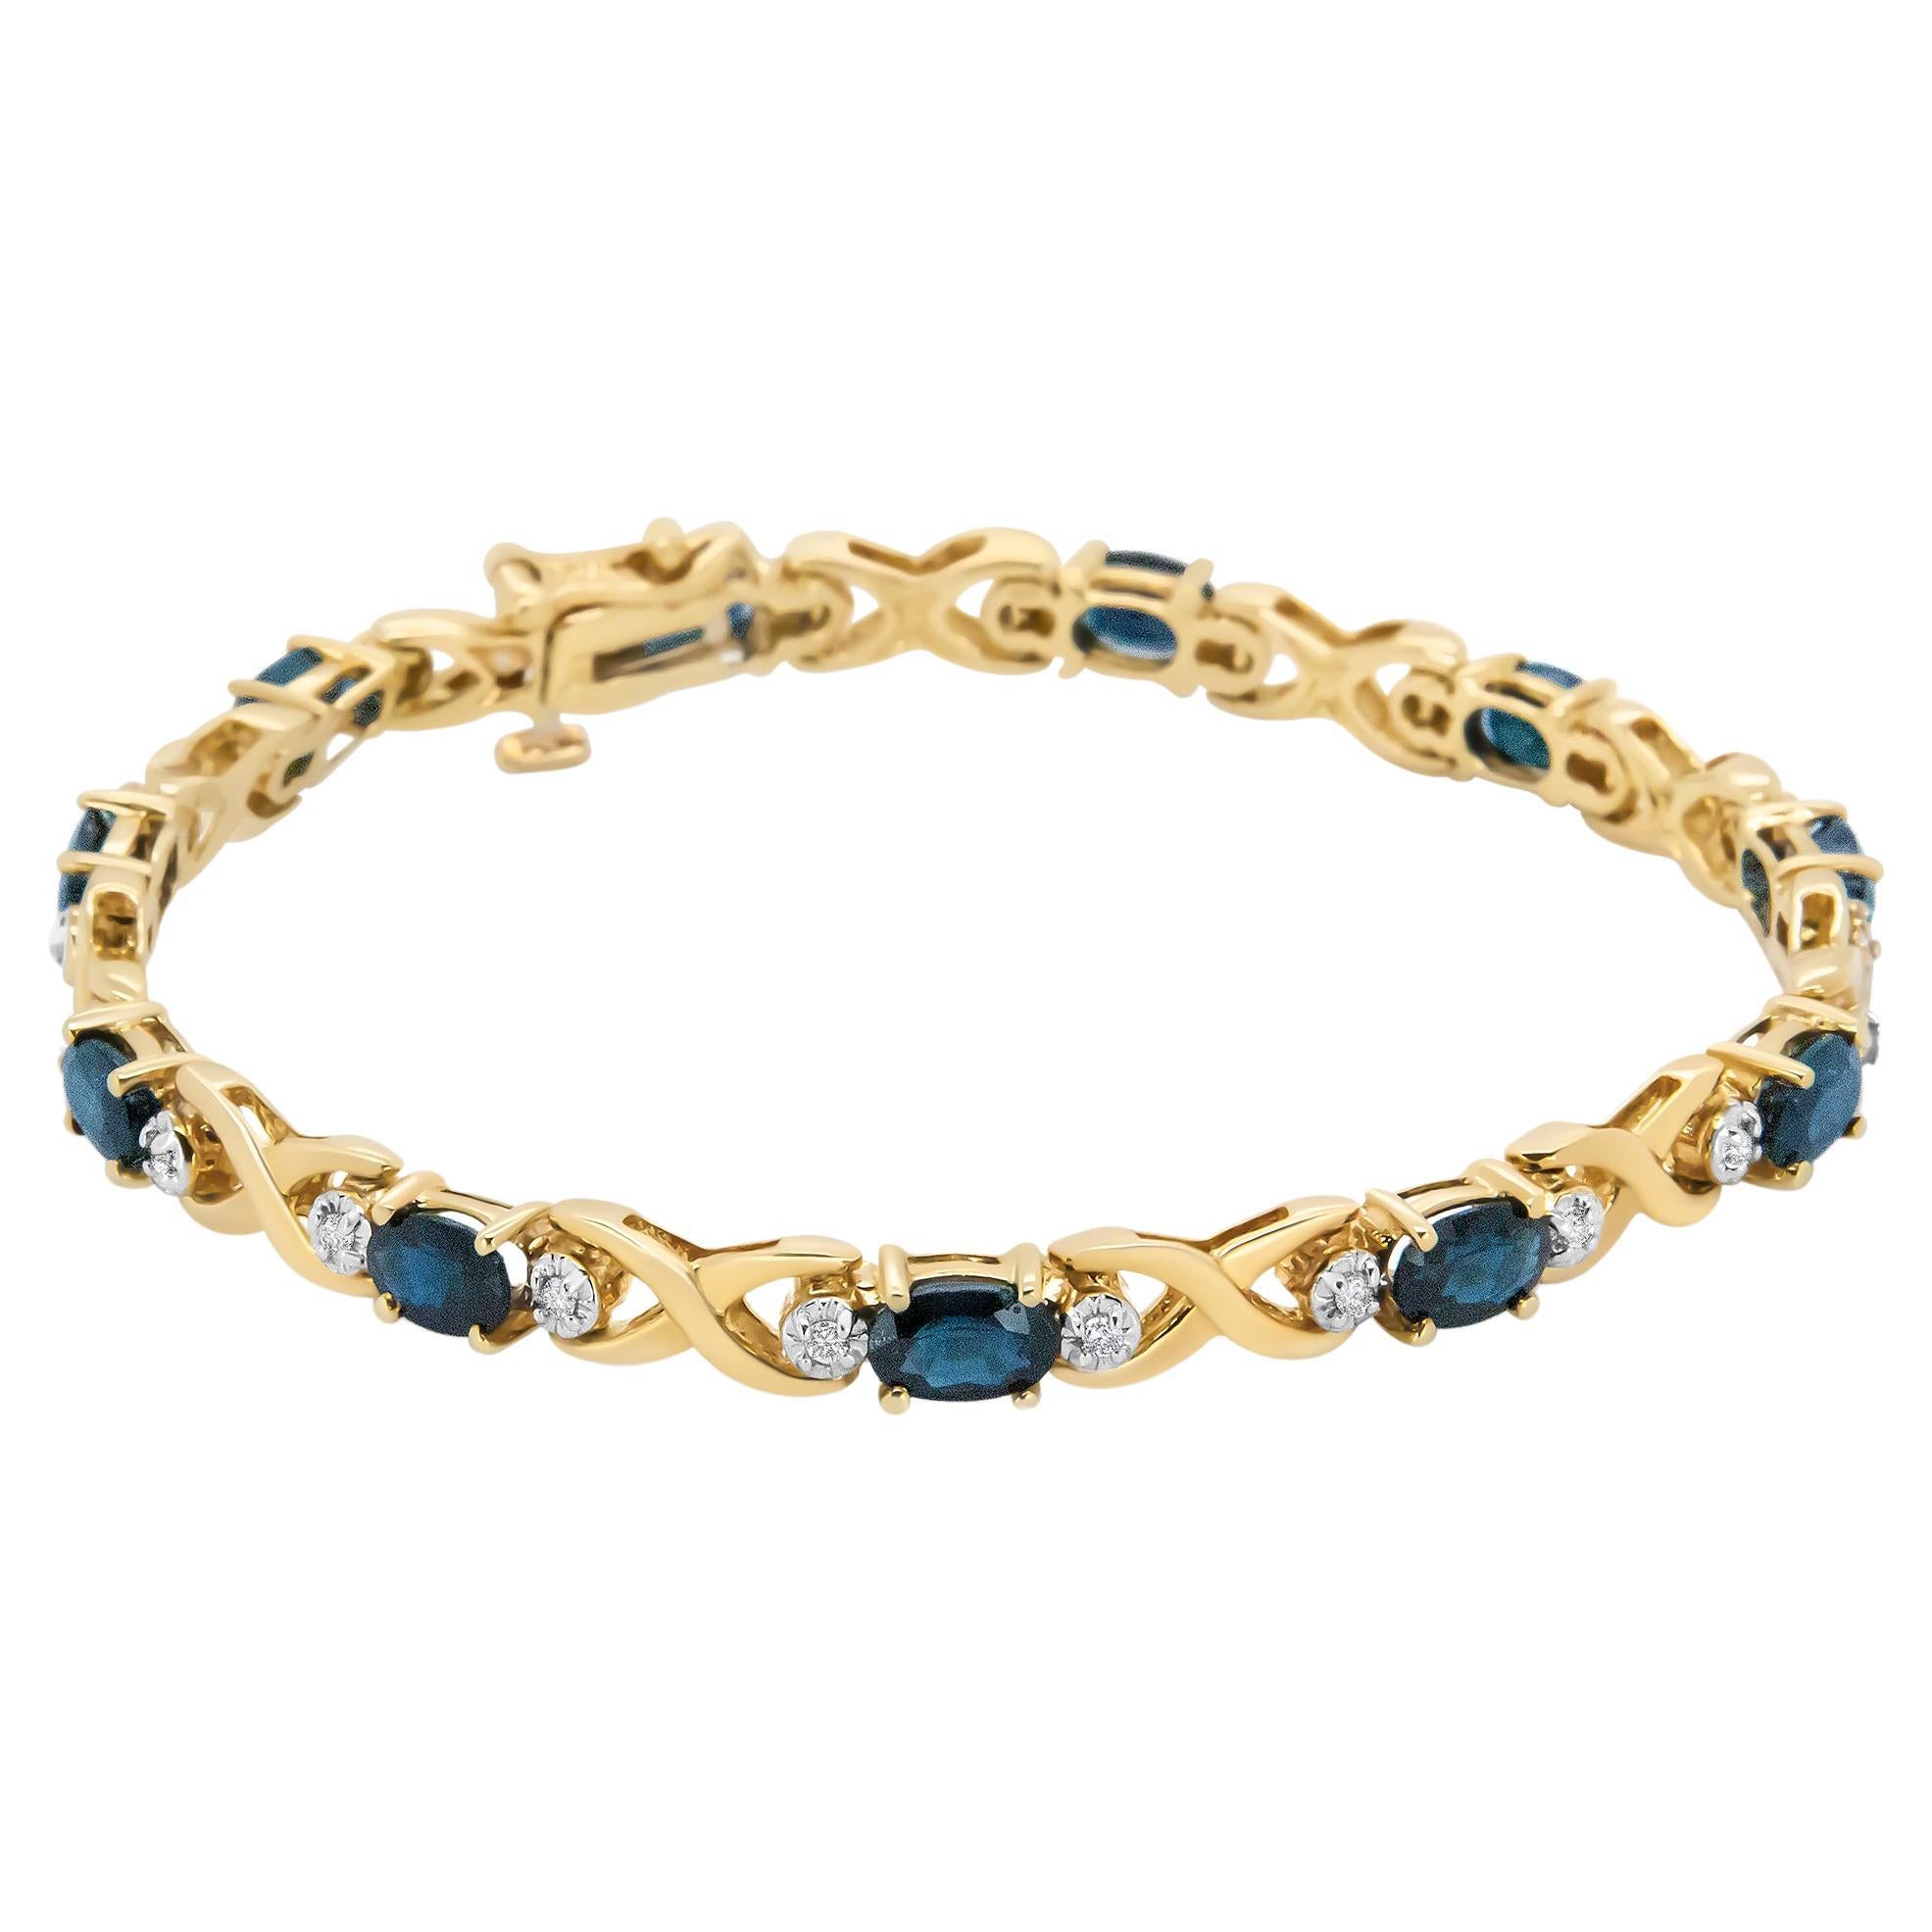 14K Yellow Gold 1 1/4 Carat Round Diamond and Blue Sapphire "X" Link Bracelet